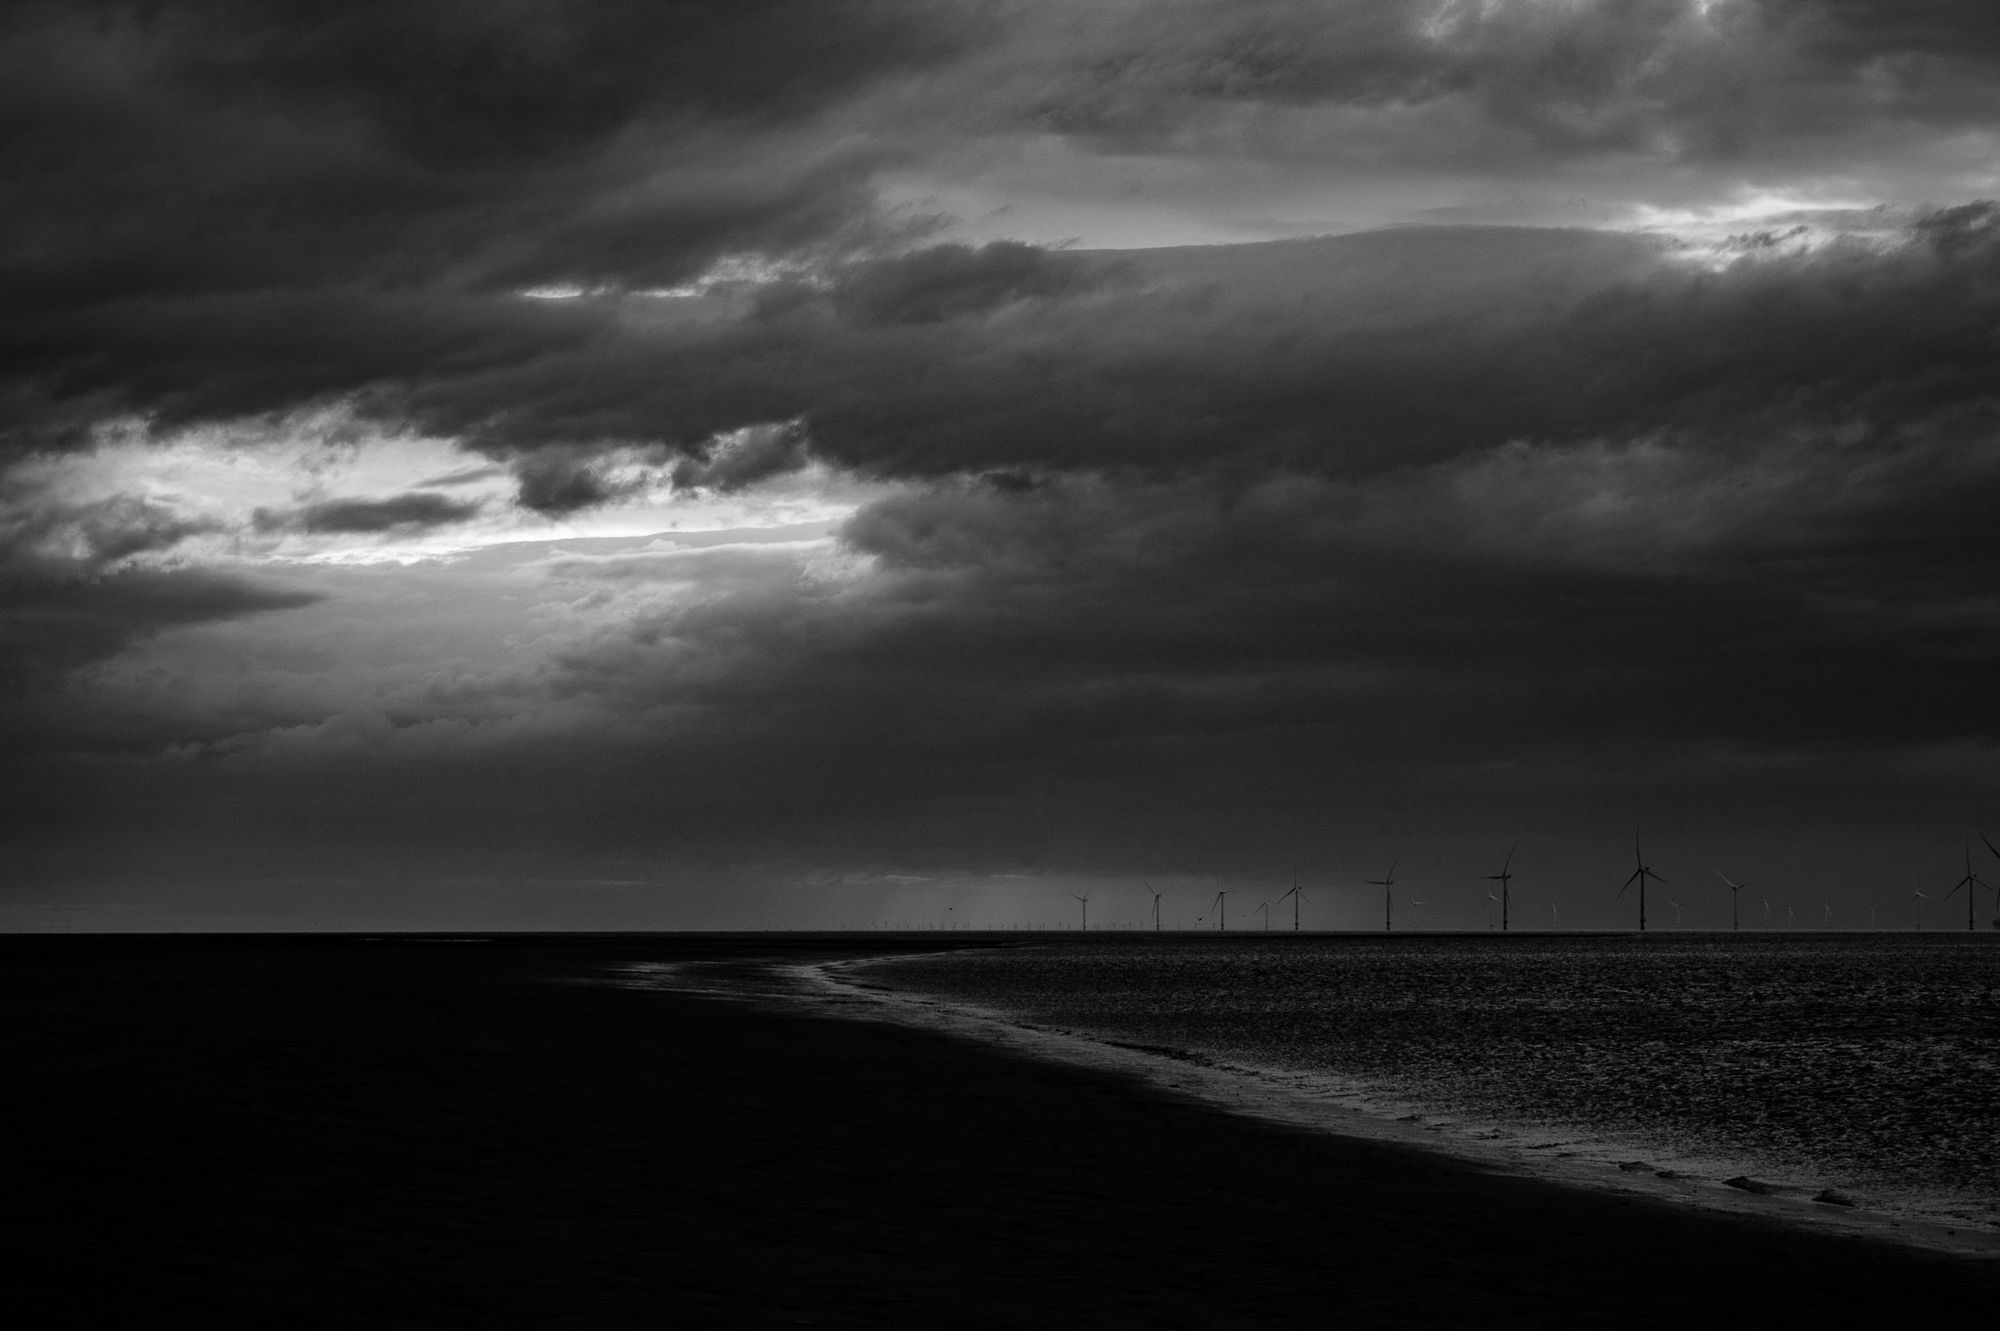 Wind turbines on the horizon on a dark overcast day.